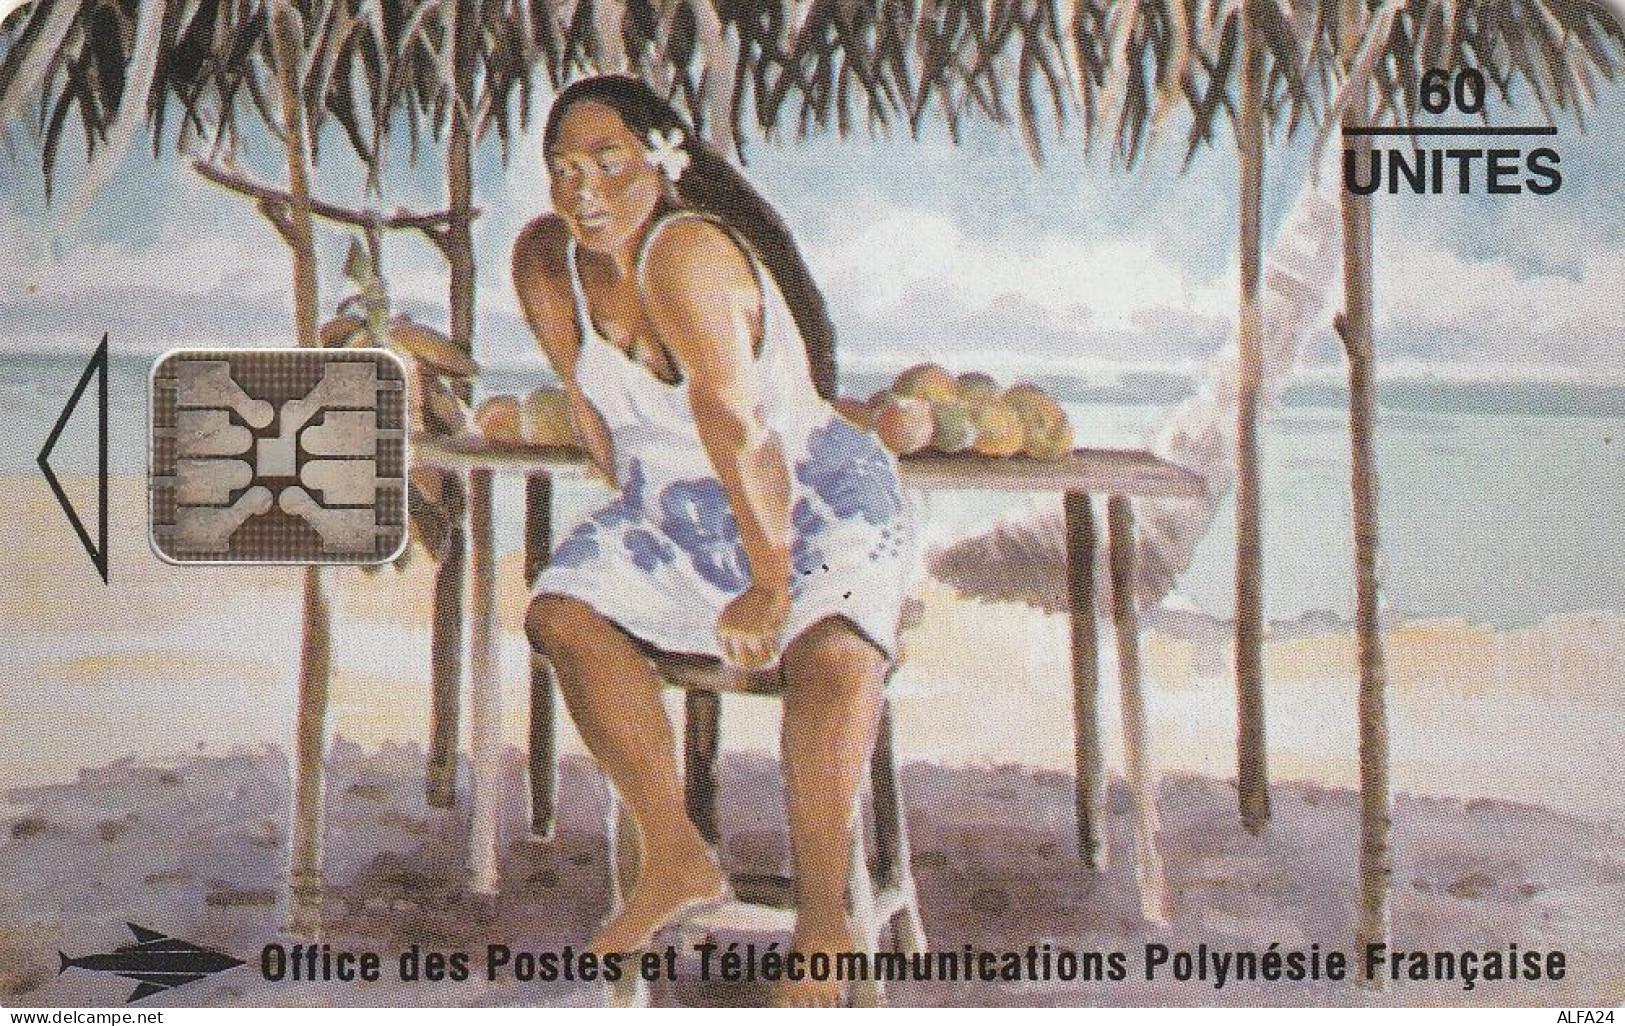 PHONE CARD POLINESIA FRANCESE  (E72.13.3 - Polinesia Francesa